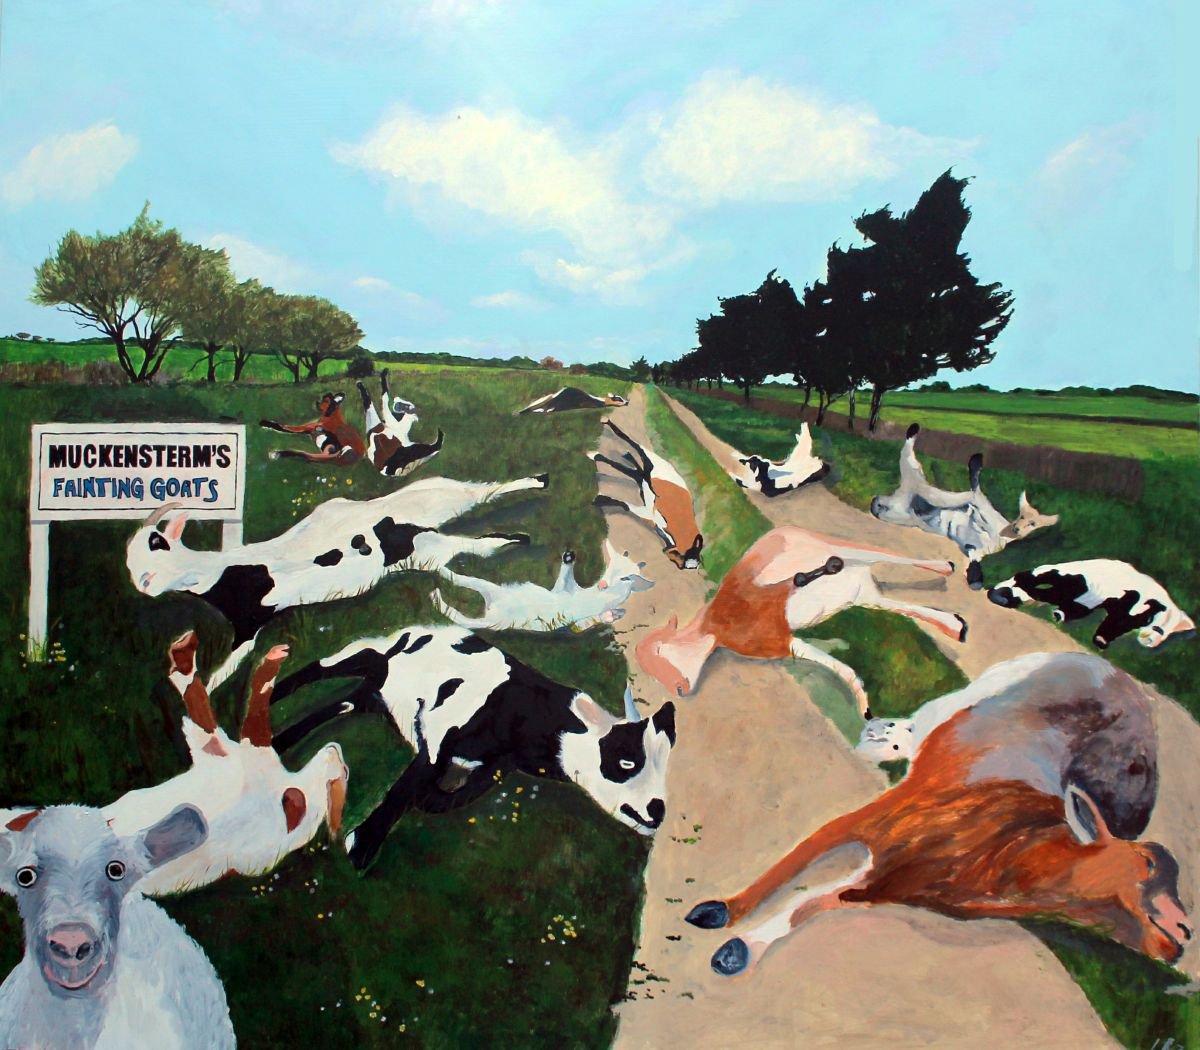 Muckensterns Fainting Goats by Ken Vrana